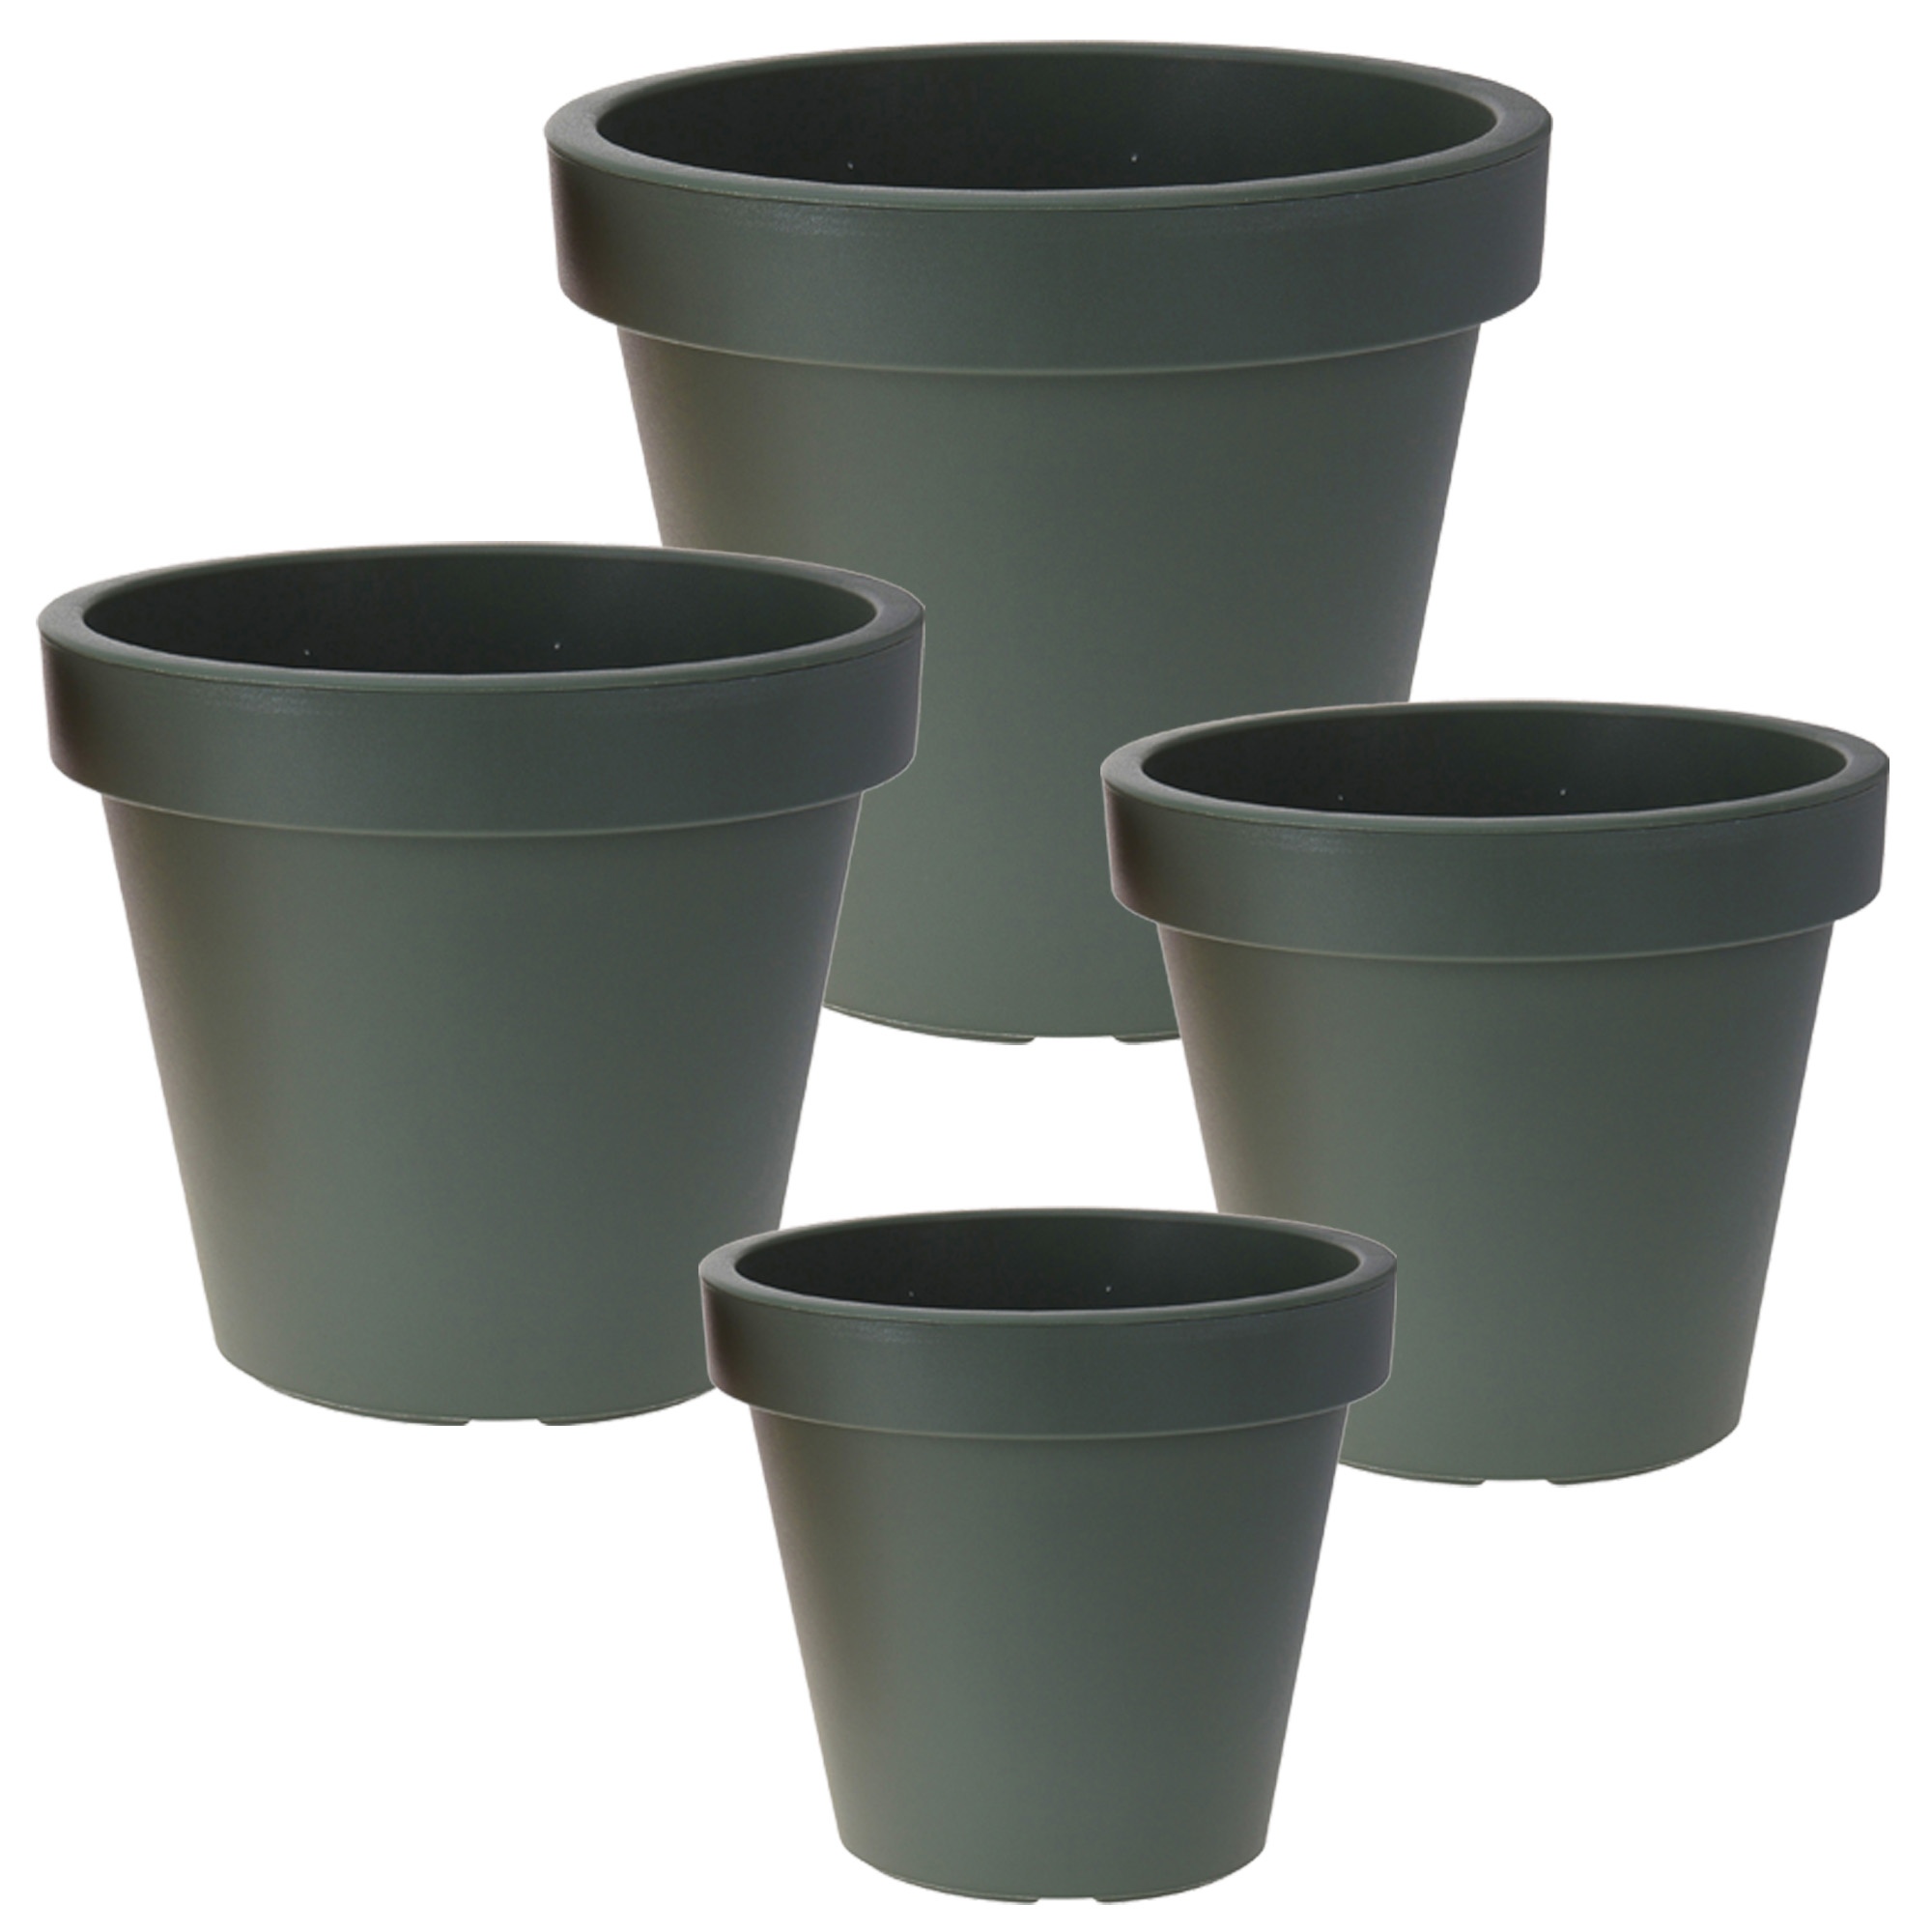 30 inch diameter plastic planter pots information